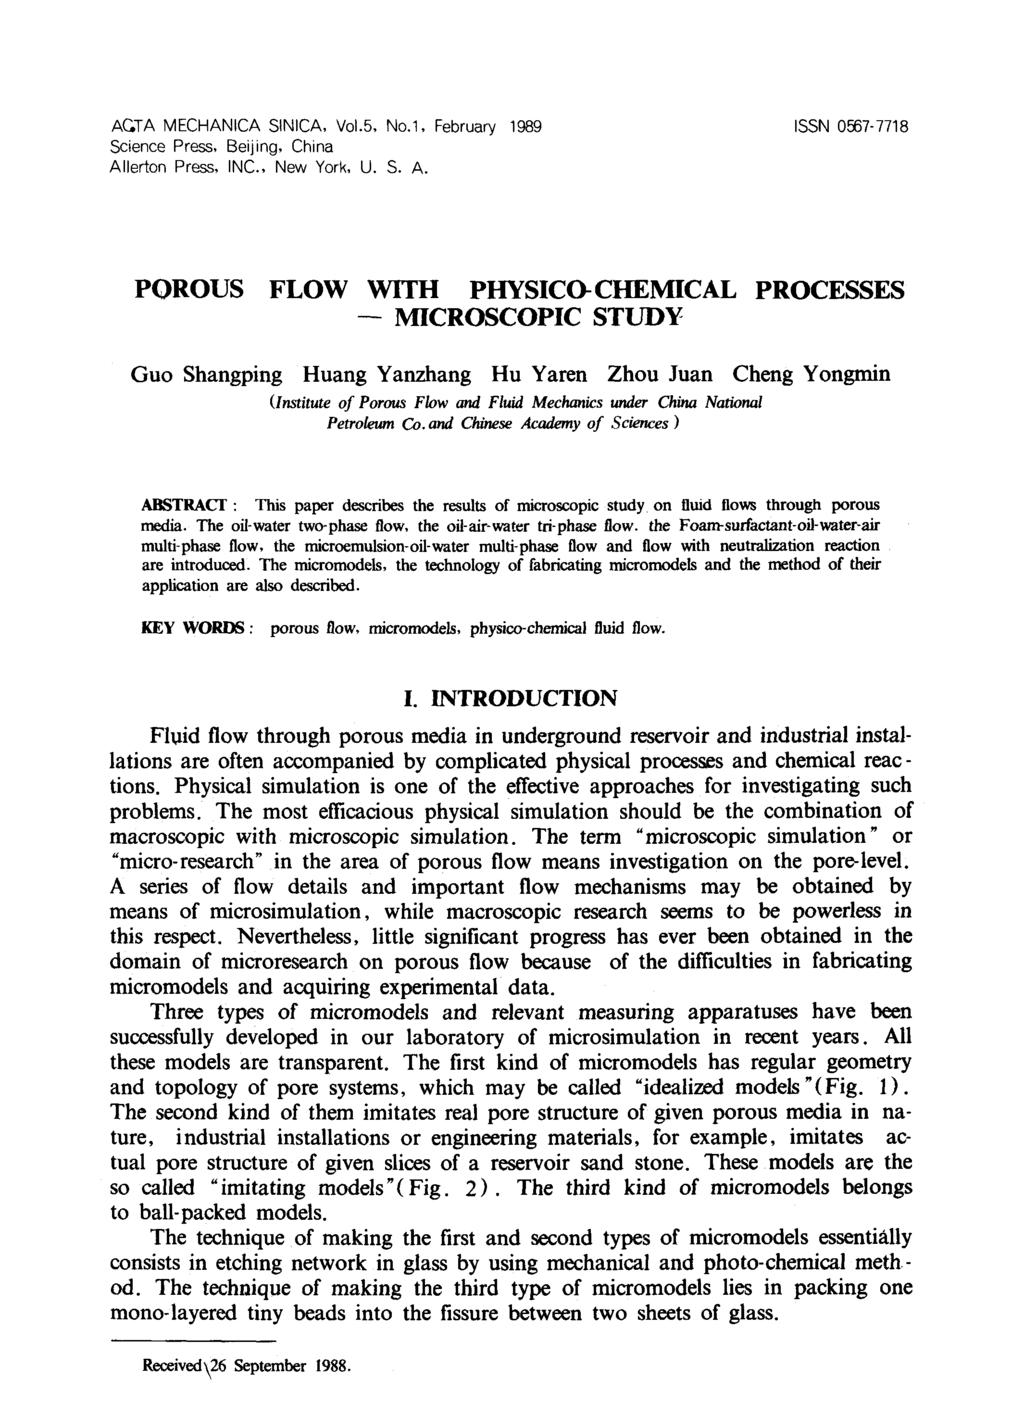 AC.TA MECHANICA SINICA, Vol.5, No.l, February 1989 Science Press, Beijing, China Al